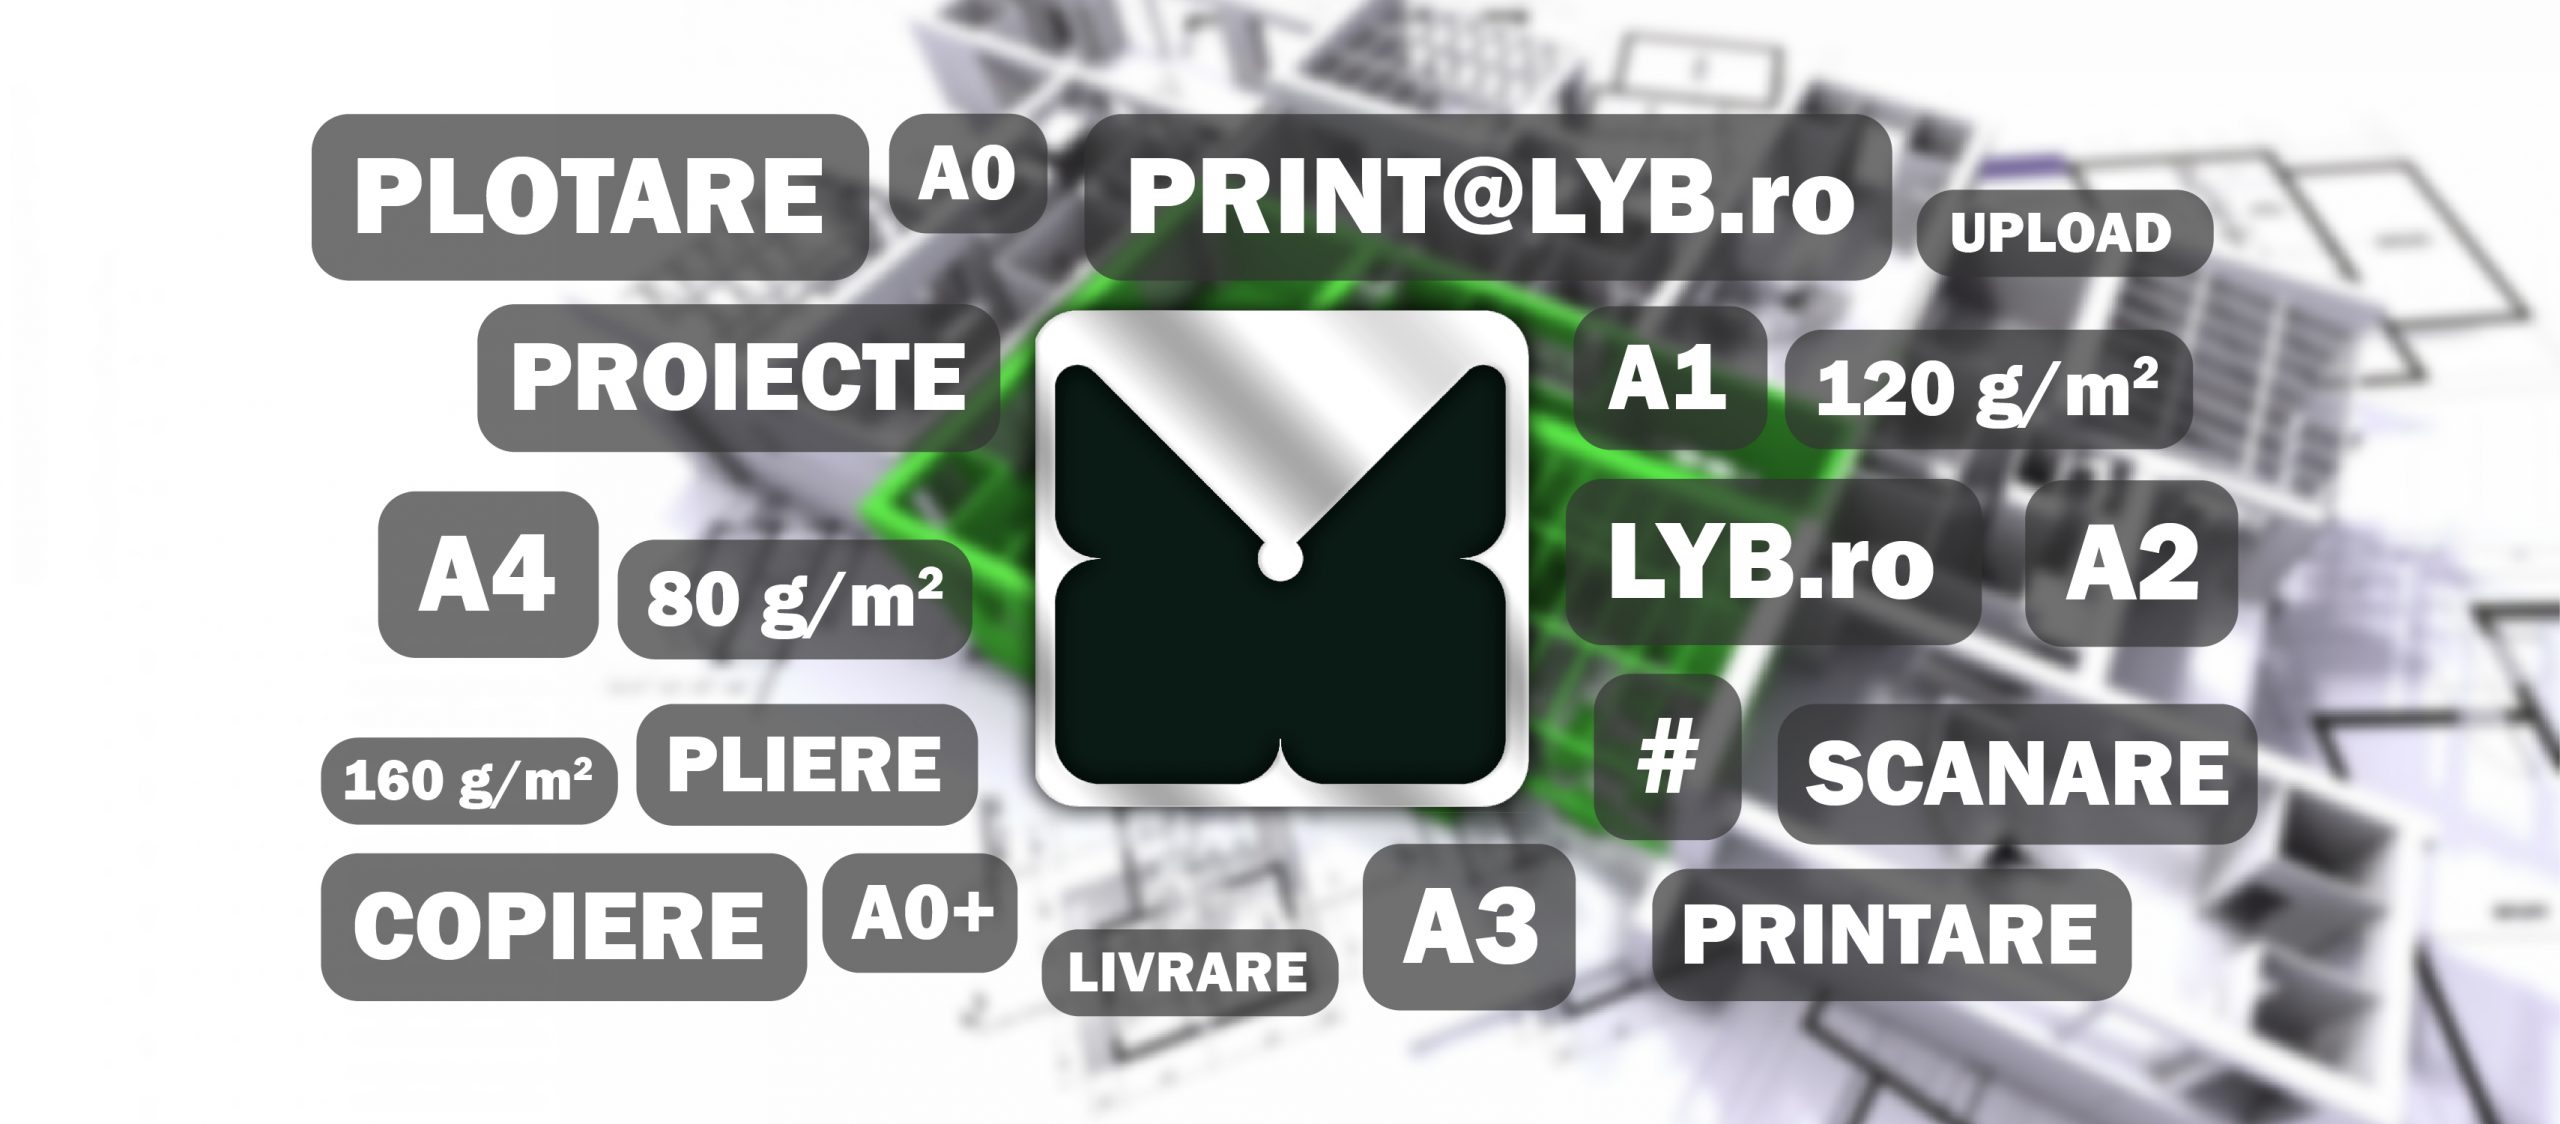 LYB Sediu Plotare Printare Xerox Belvedere Sector 6